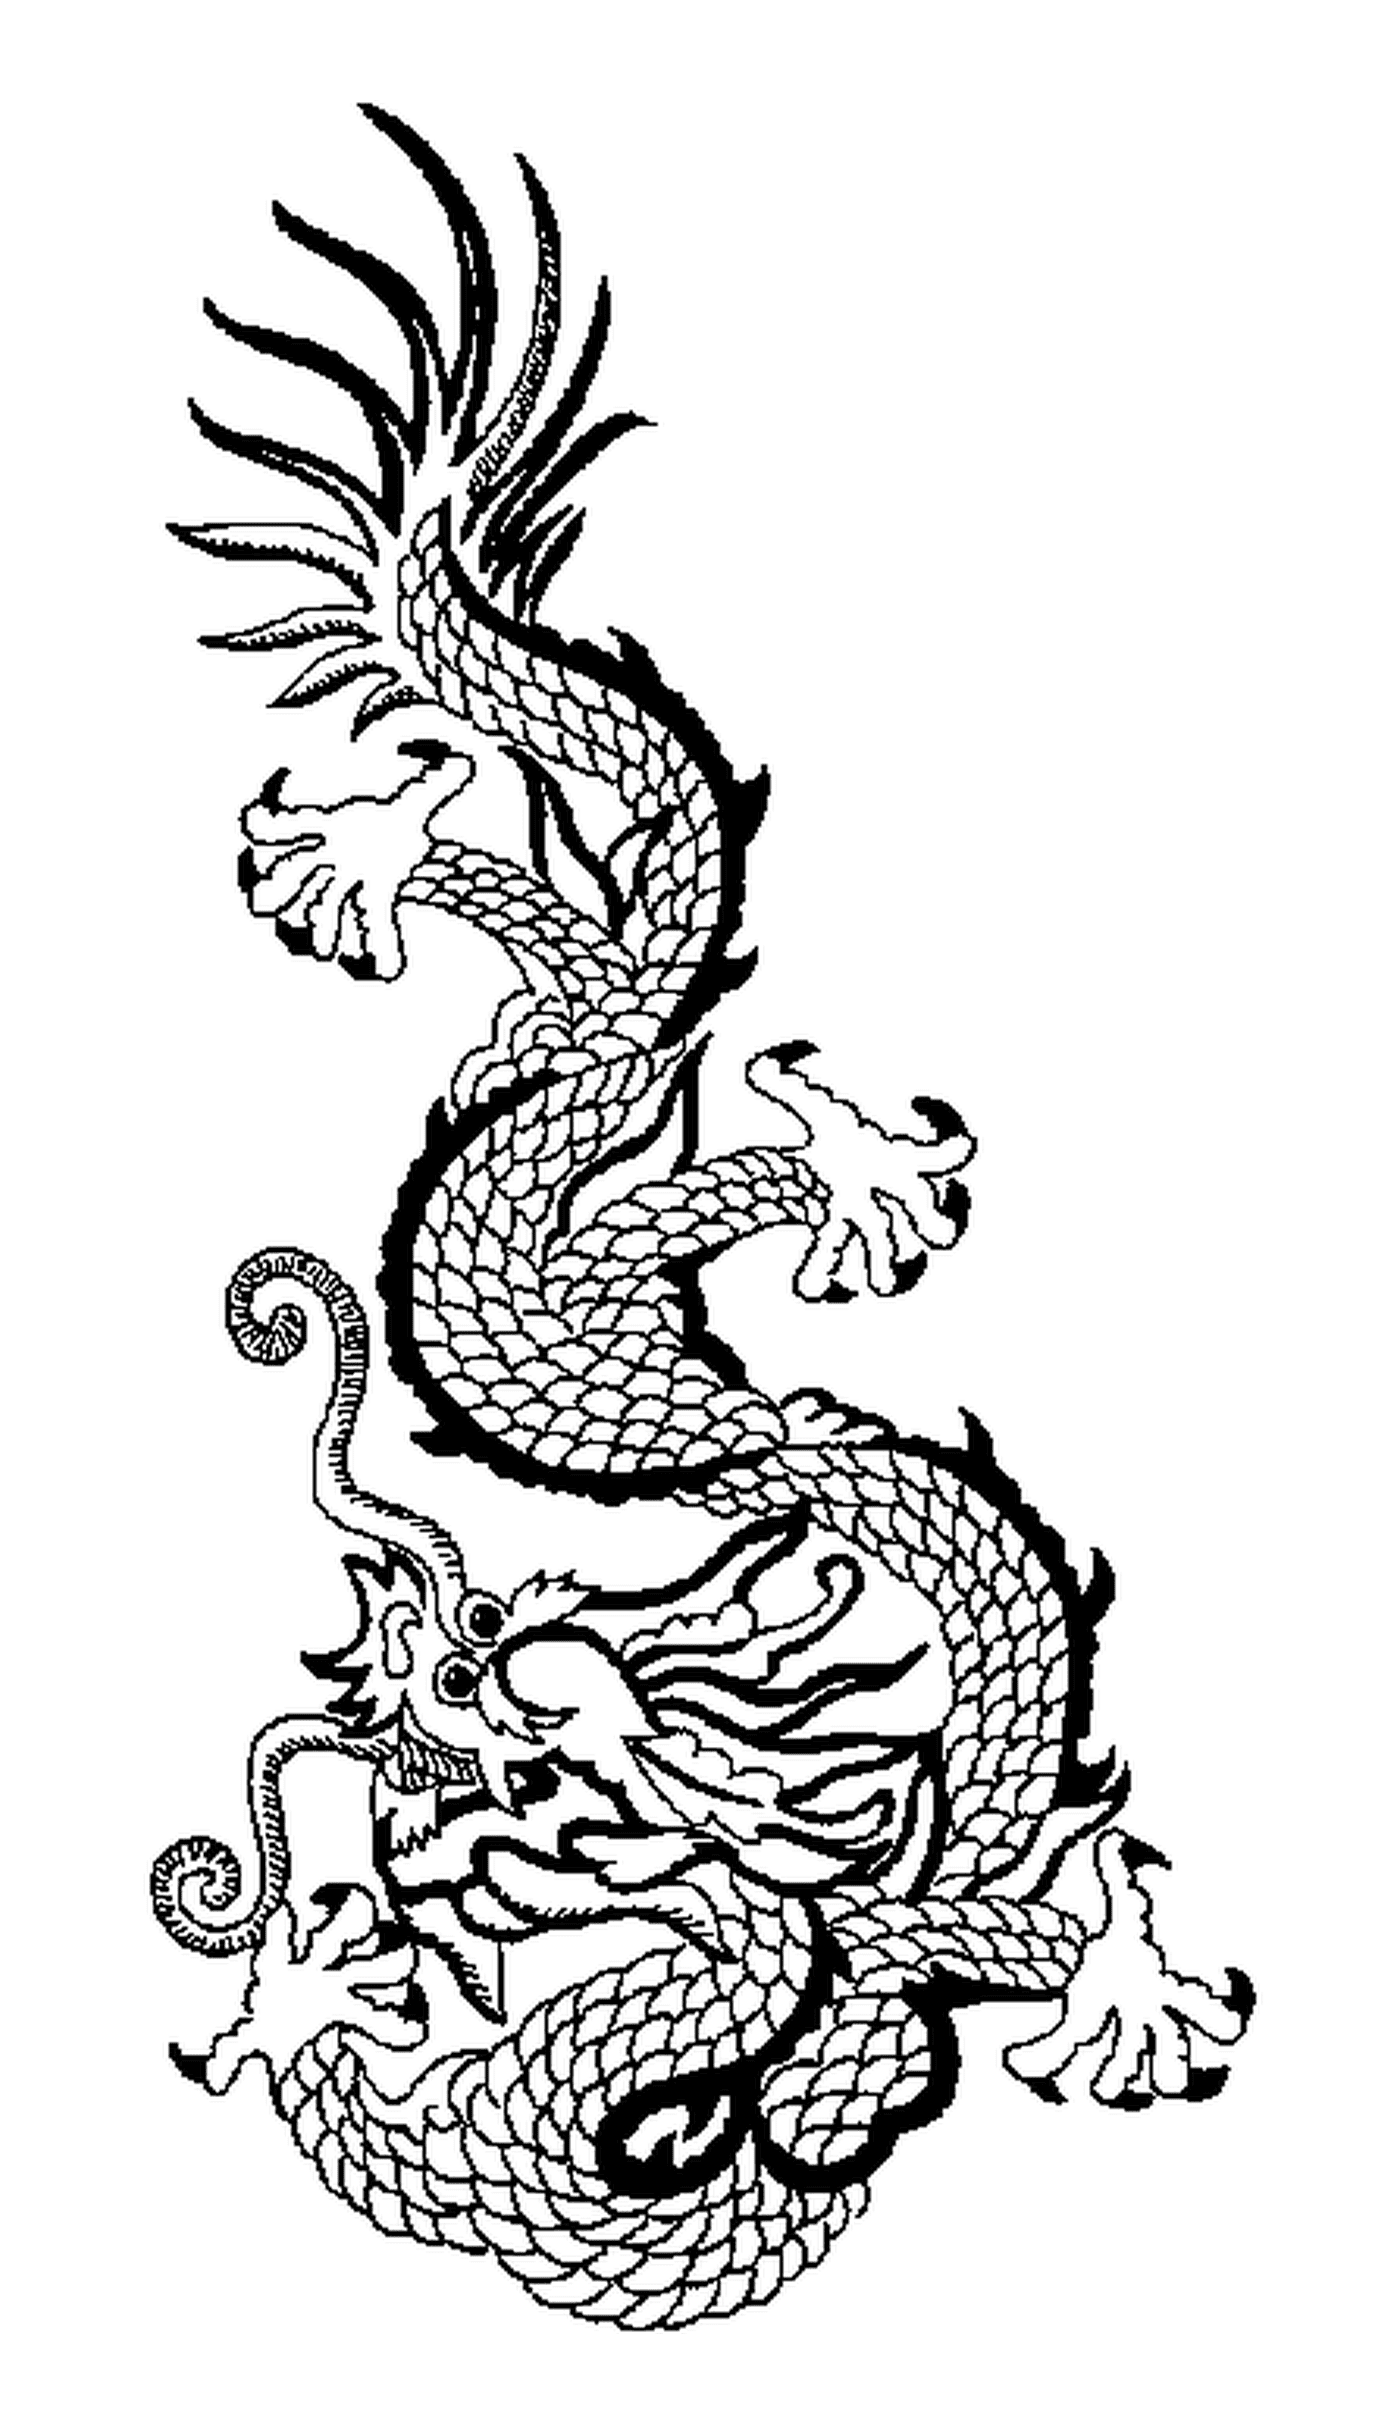  Китайский дракон 